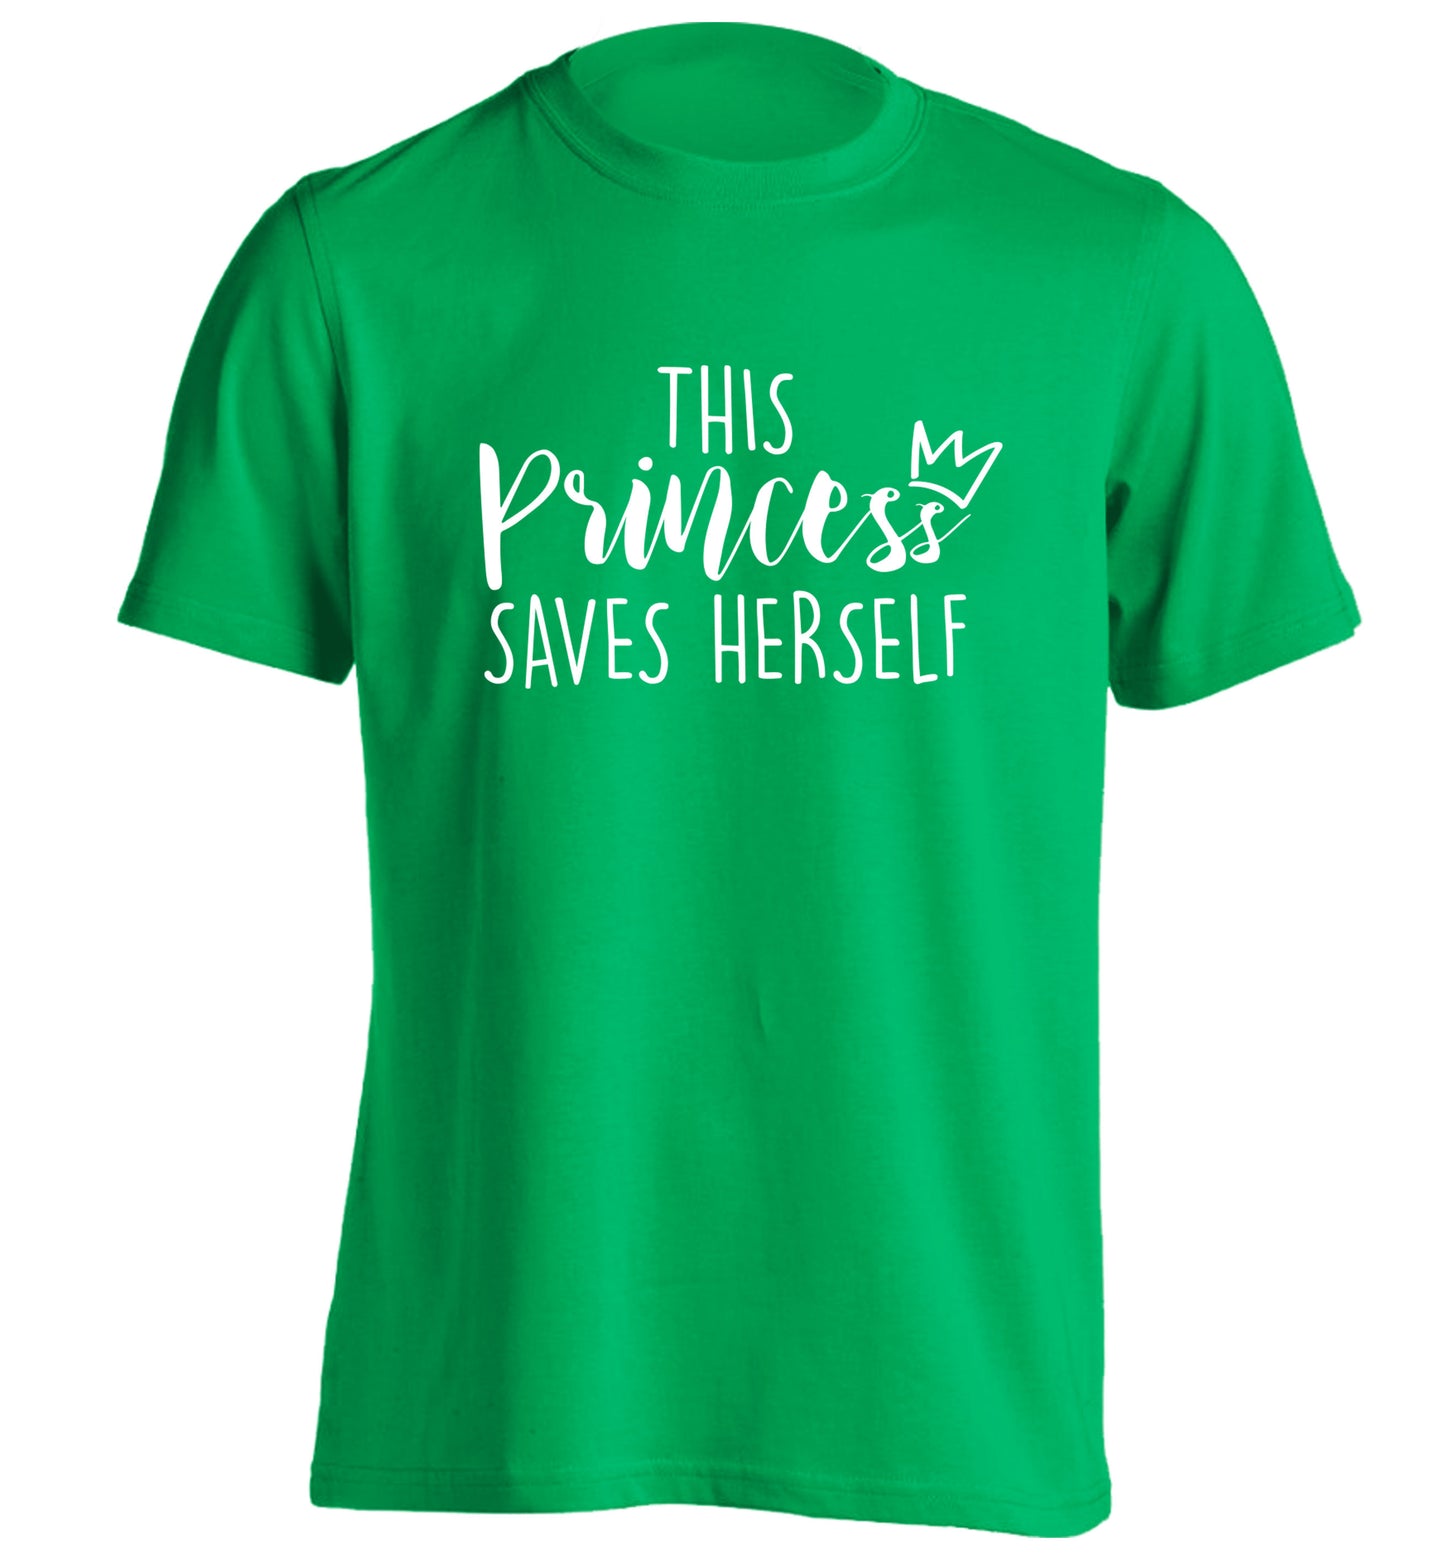 This princess saves herself adults unisex green Tshirt 2XL